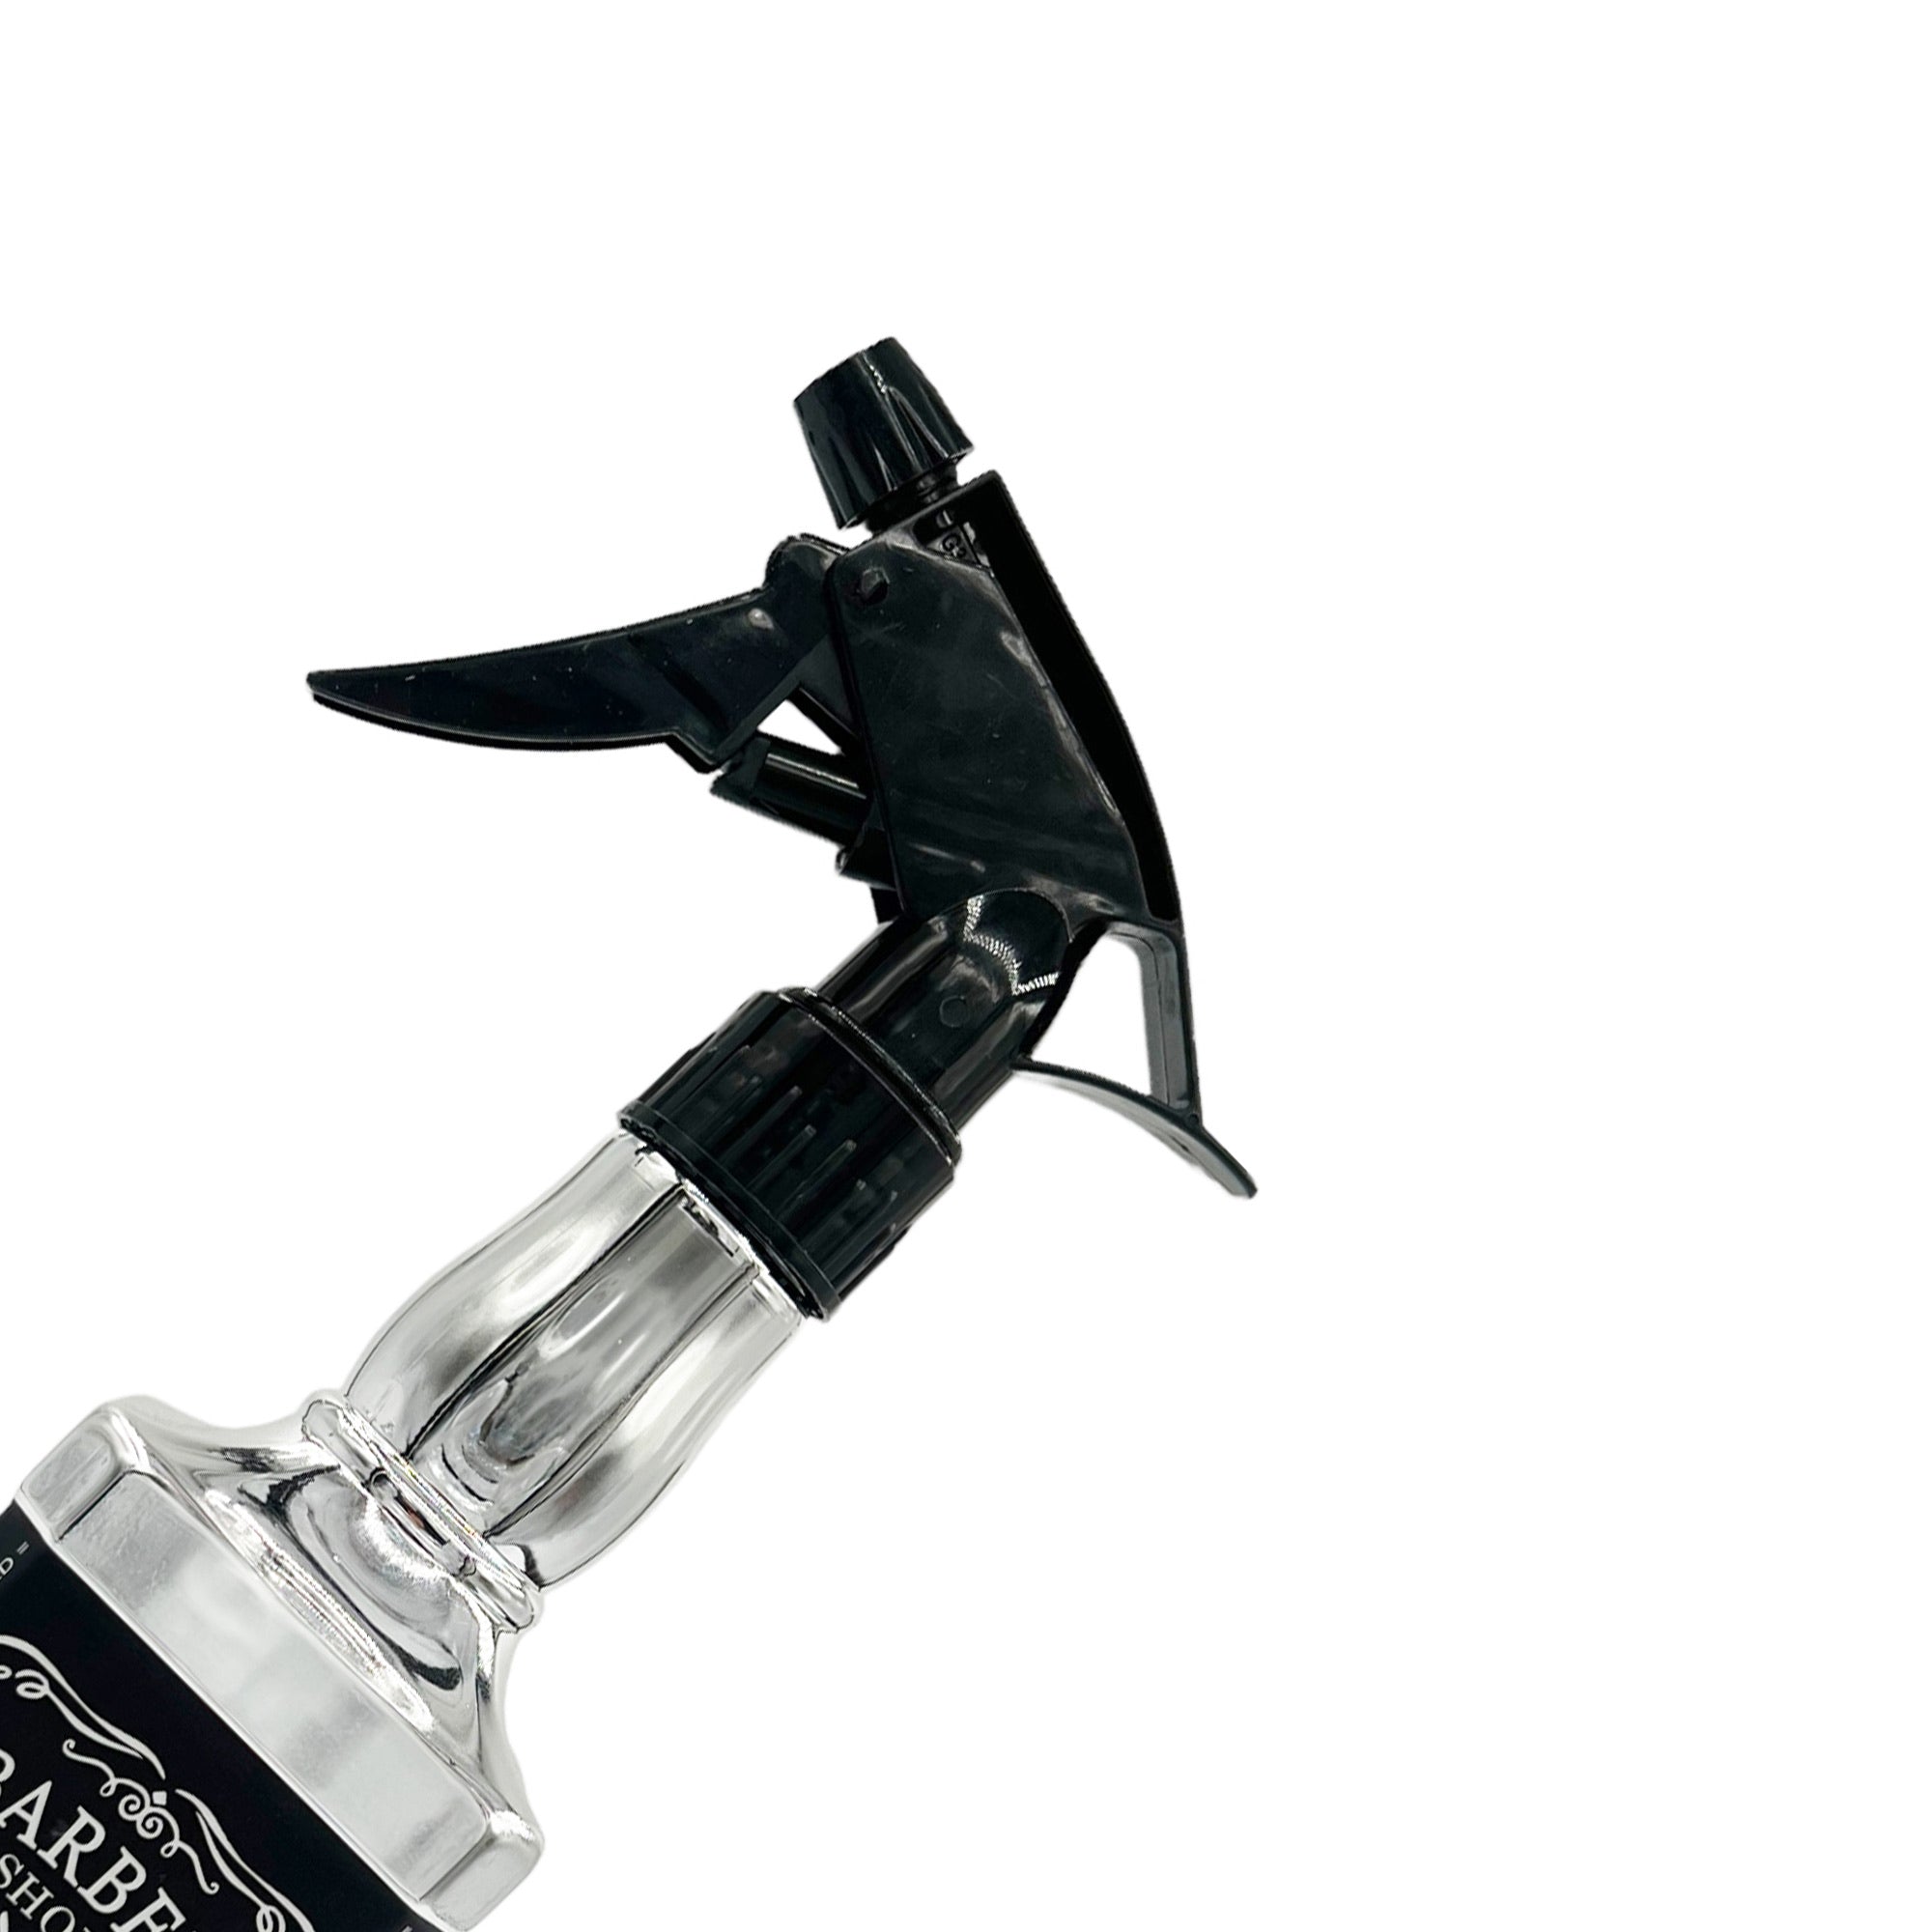 Eson - Water Spray Bottle 500ml Extreme Mist Sprayer Whisky Style (Silver)